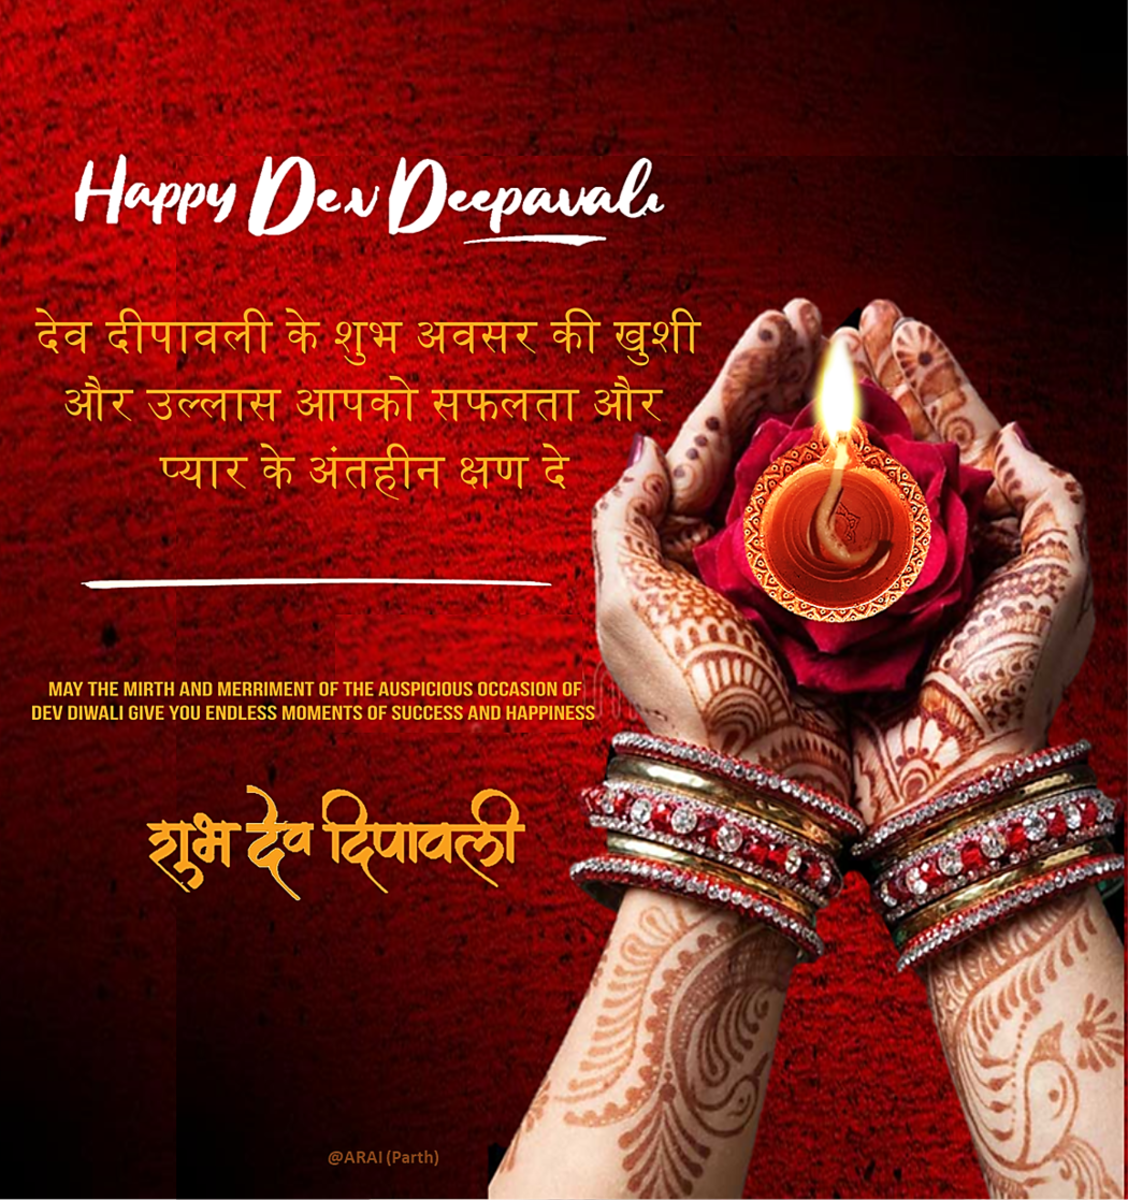 Dev Deepawali Wishes in Hindi